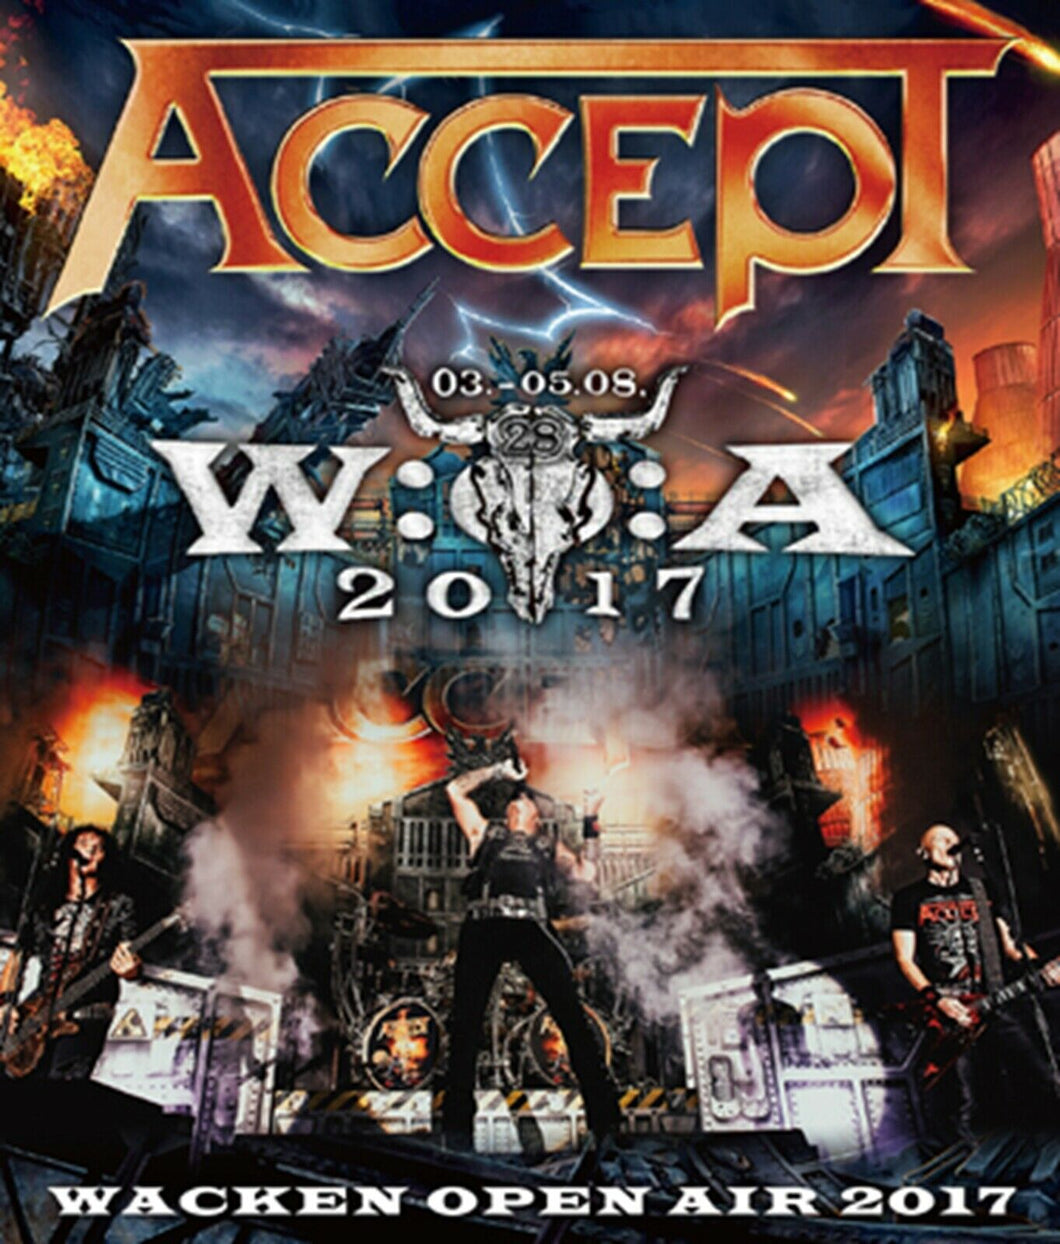 Accept Wacken Open Air 2017 August 3 Blu-ray 1 Disc 21 Tracks Heavy Metal Music